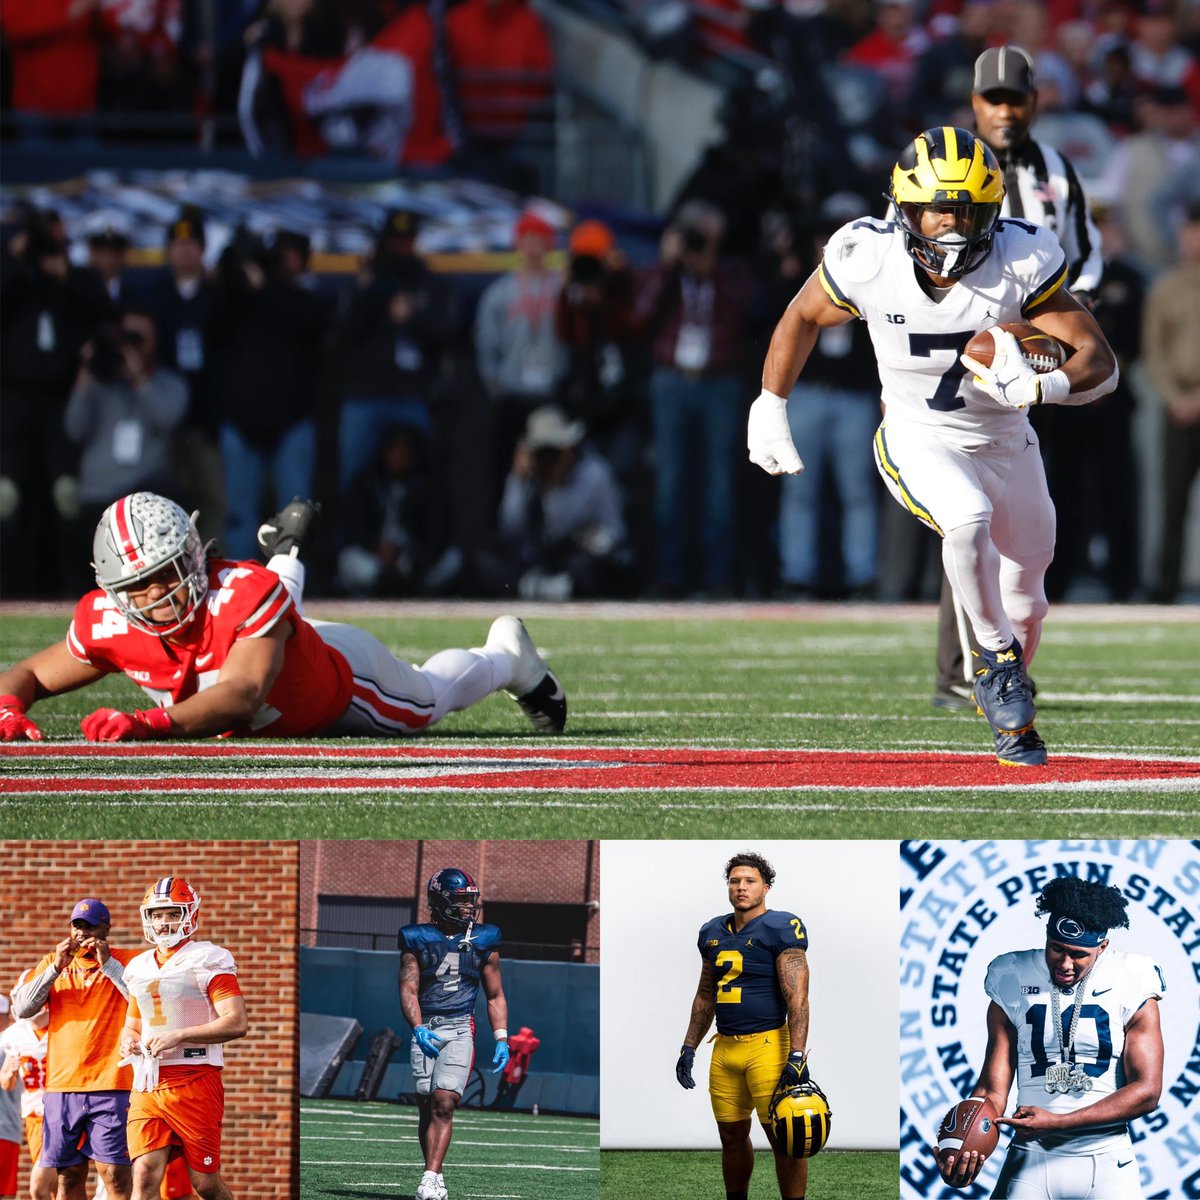 My top five running backs throughout the 2023 college football season..

1. Donovan Edwards | UM
2. Will Shipley | CU
3. Quinshon Judkins | OM
4. Blake Corum | UM 
5. Nick Singleton | PSU 

@SSN_Michigan 
@SSN_Clemson 
@SSN_OleMiss 
@SSN_PennState https://t.co/fQ6SWYRfIR